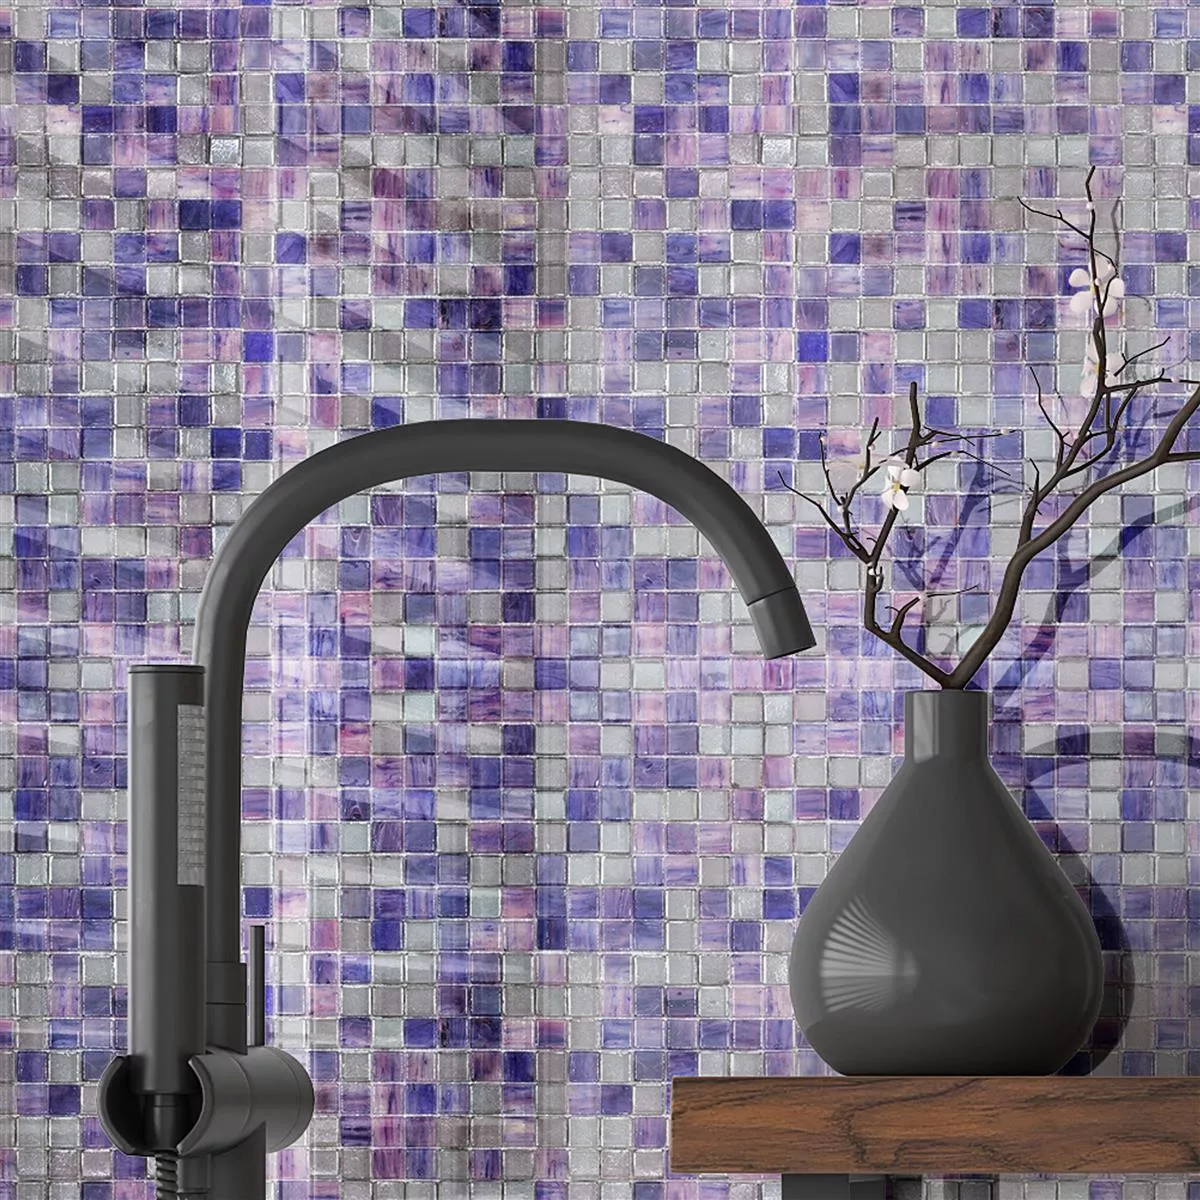 Sample Glass Mosaic Tiles Edessa Purple Mix